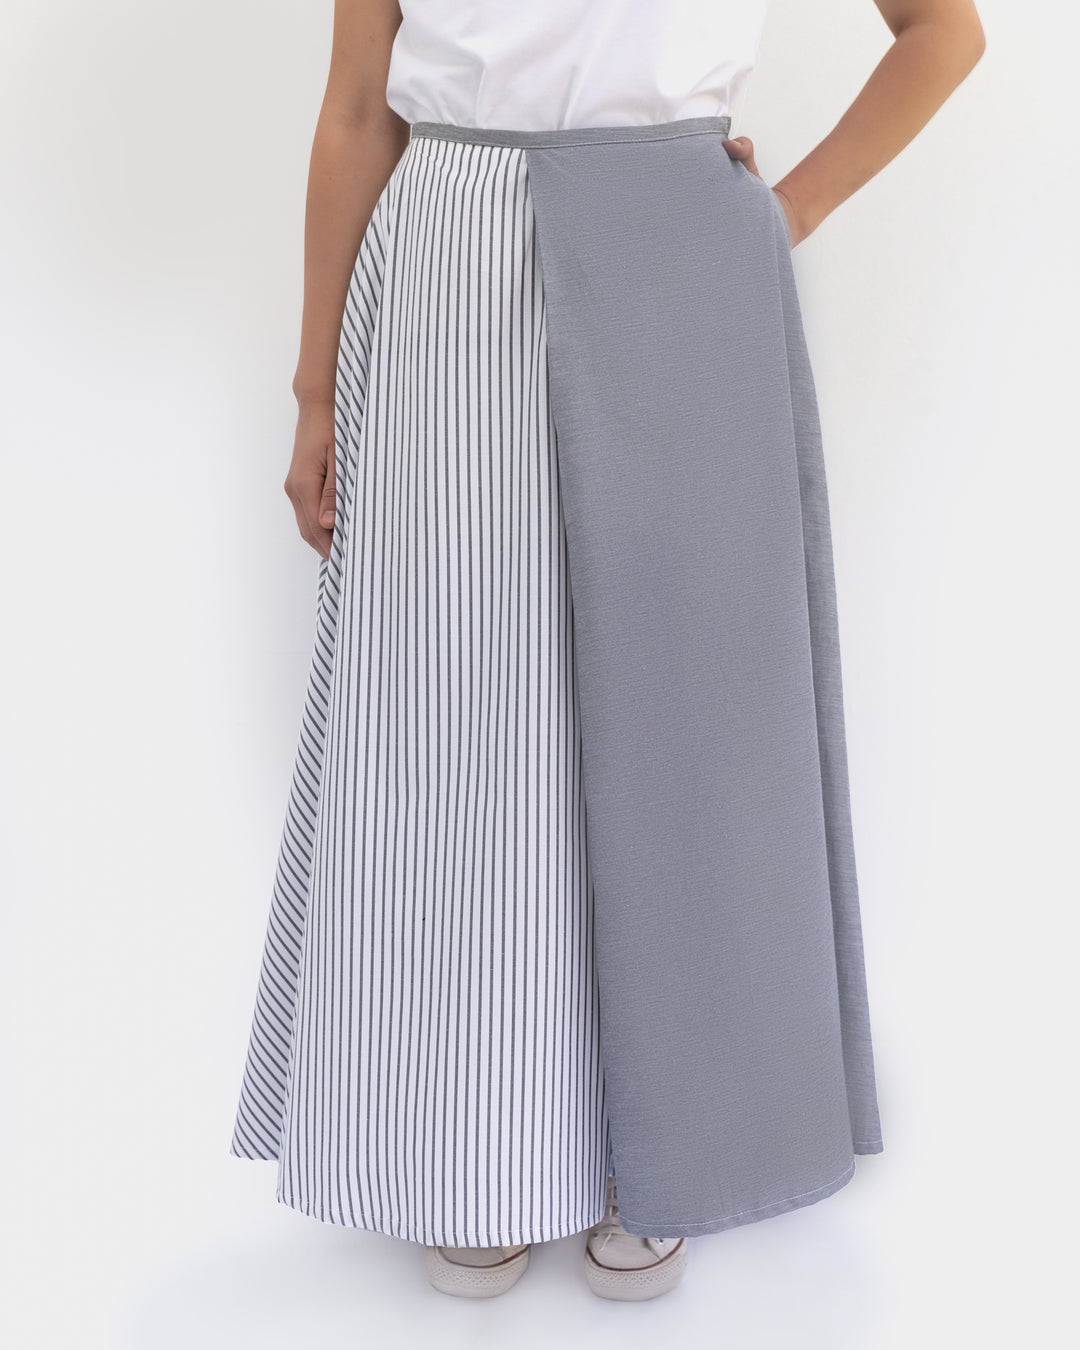 Mixed Fabric A-line Skirt